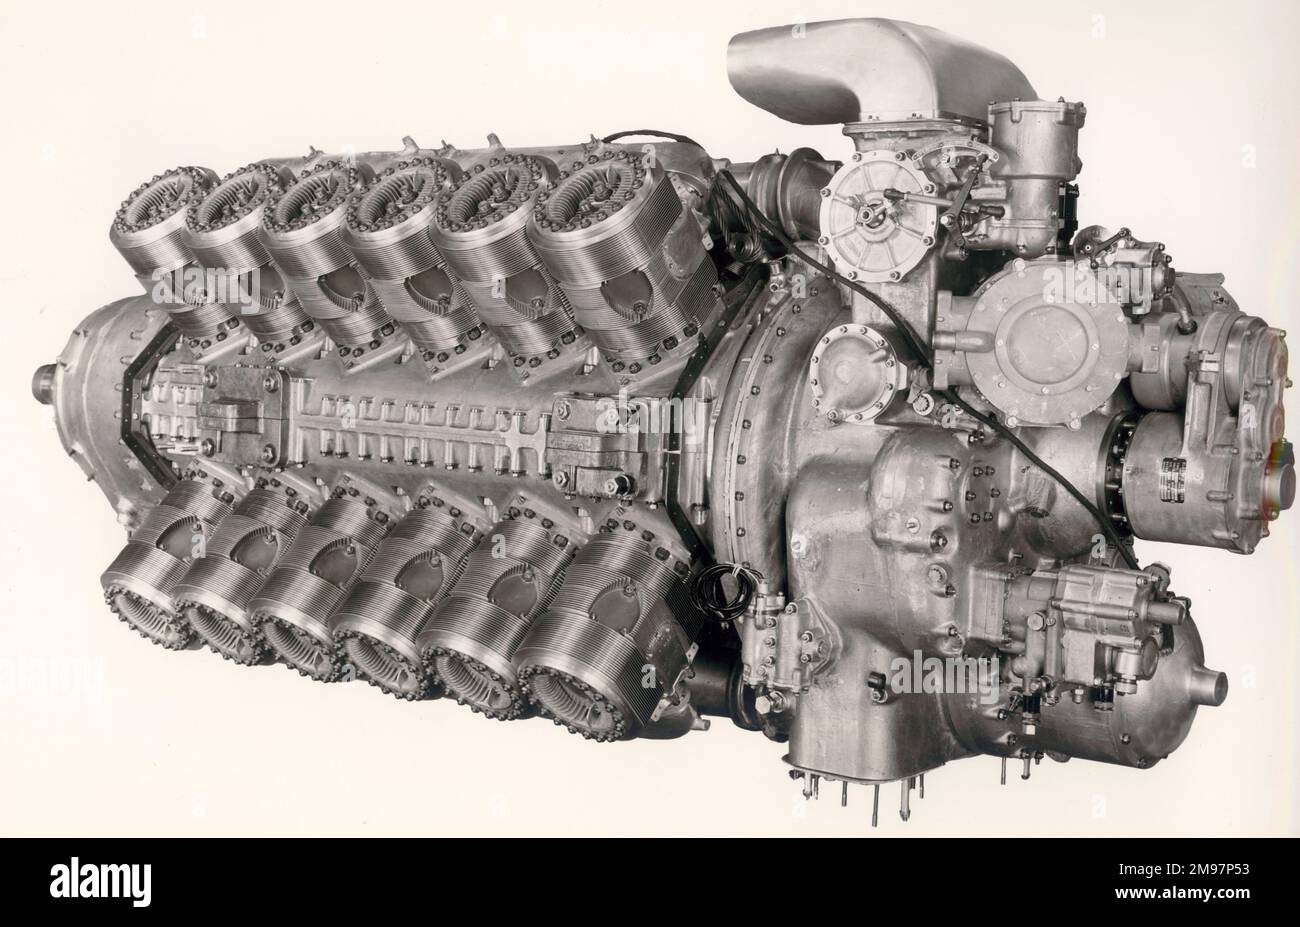 Rolls-Royce Pennine 24-cylinder, air-cooled, X-block, sleeve-valve engine. Stock Photo